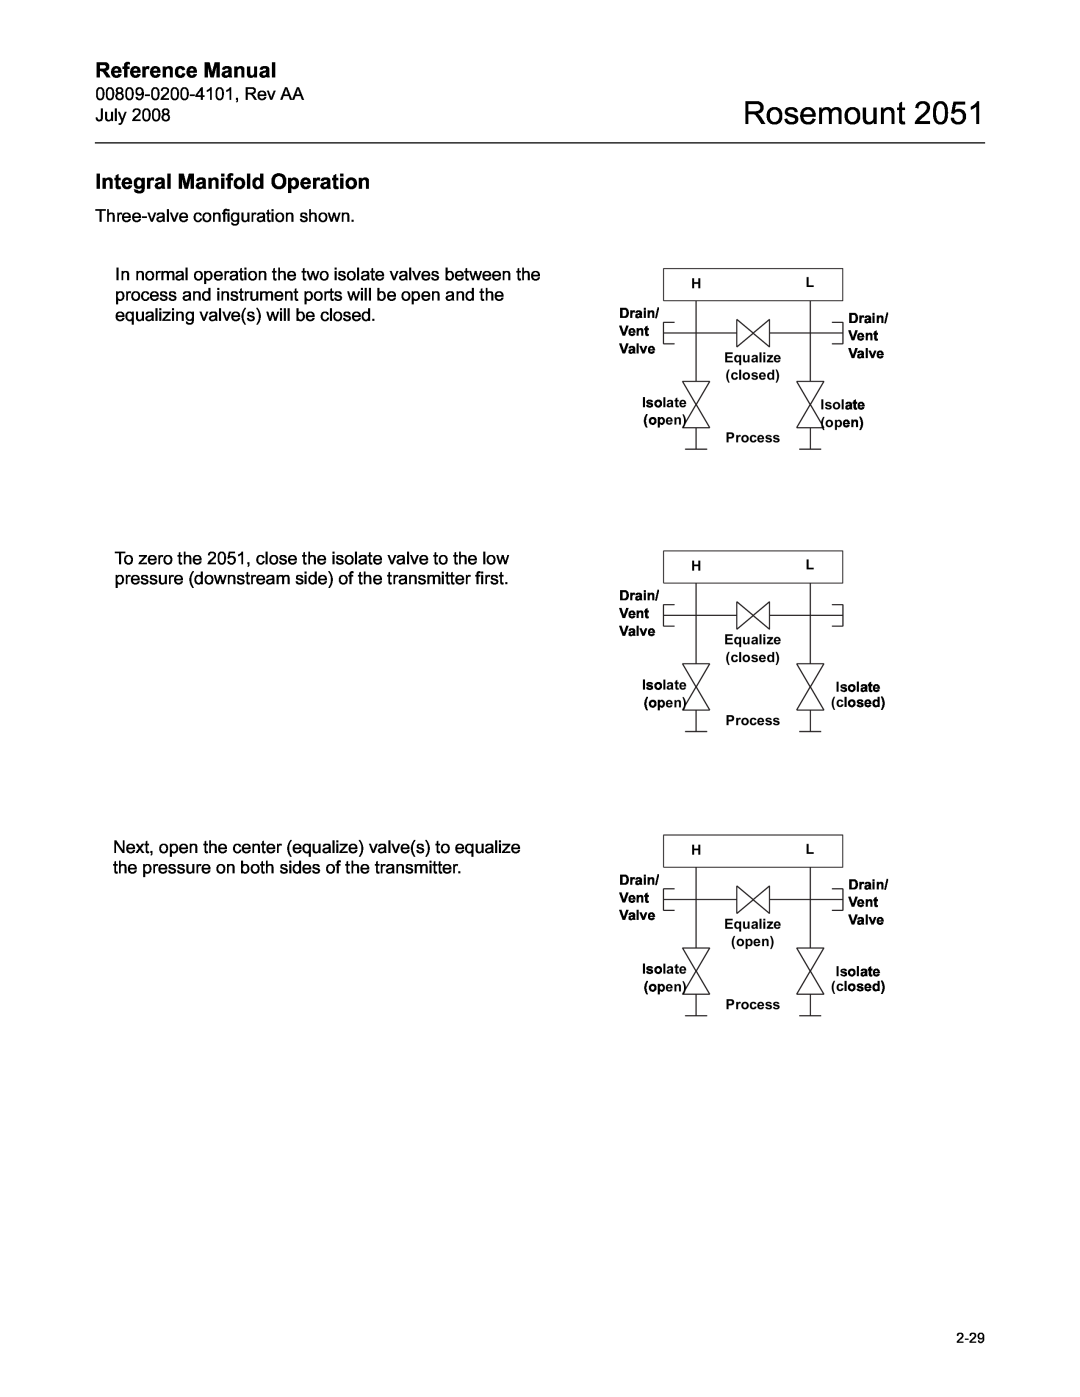 Emerson Process Management 2051 manual Integral Manifold Operation, Rosemount, Reference Manual 